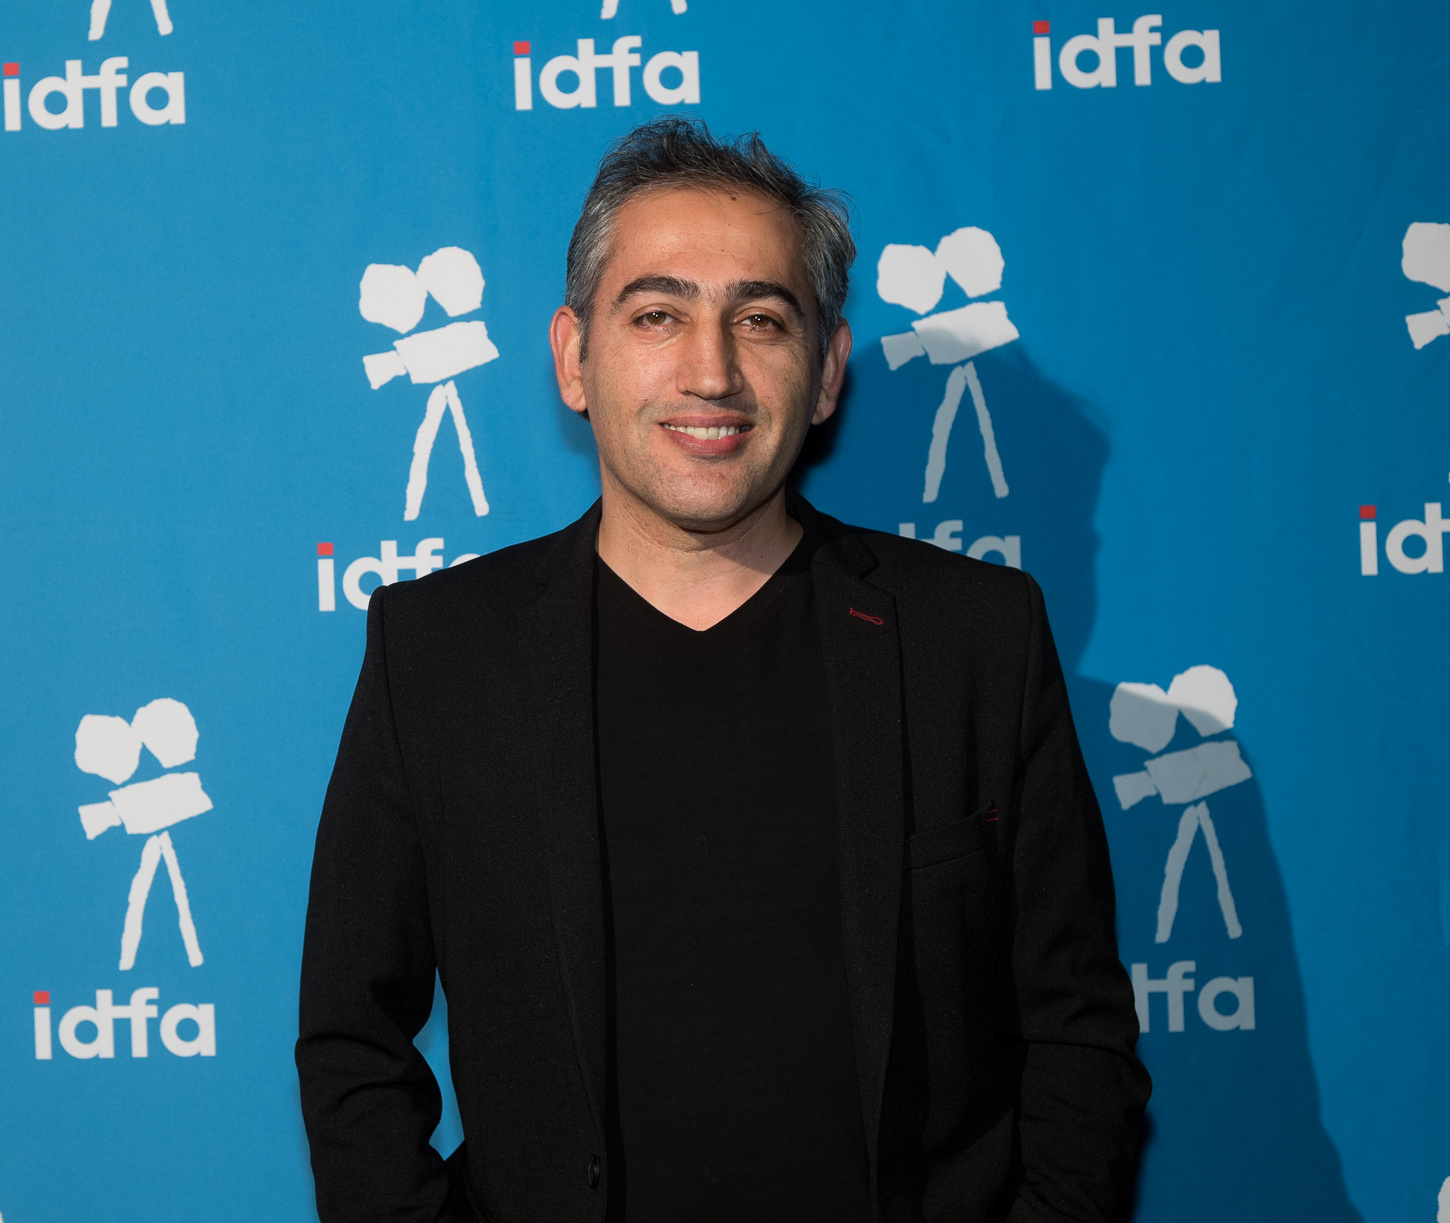 Premiere photo at IDFA 2015, Amsterdam